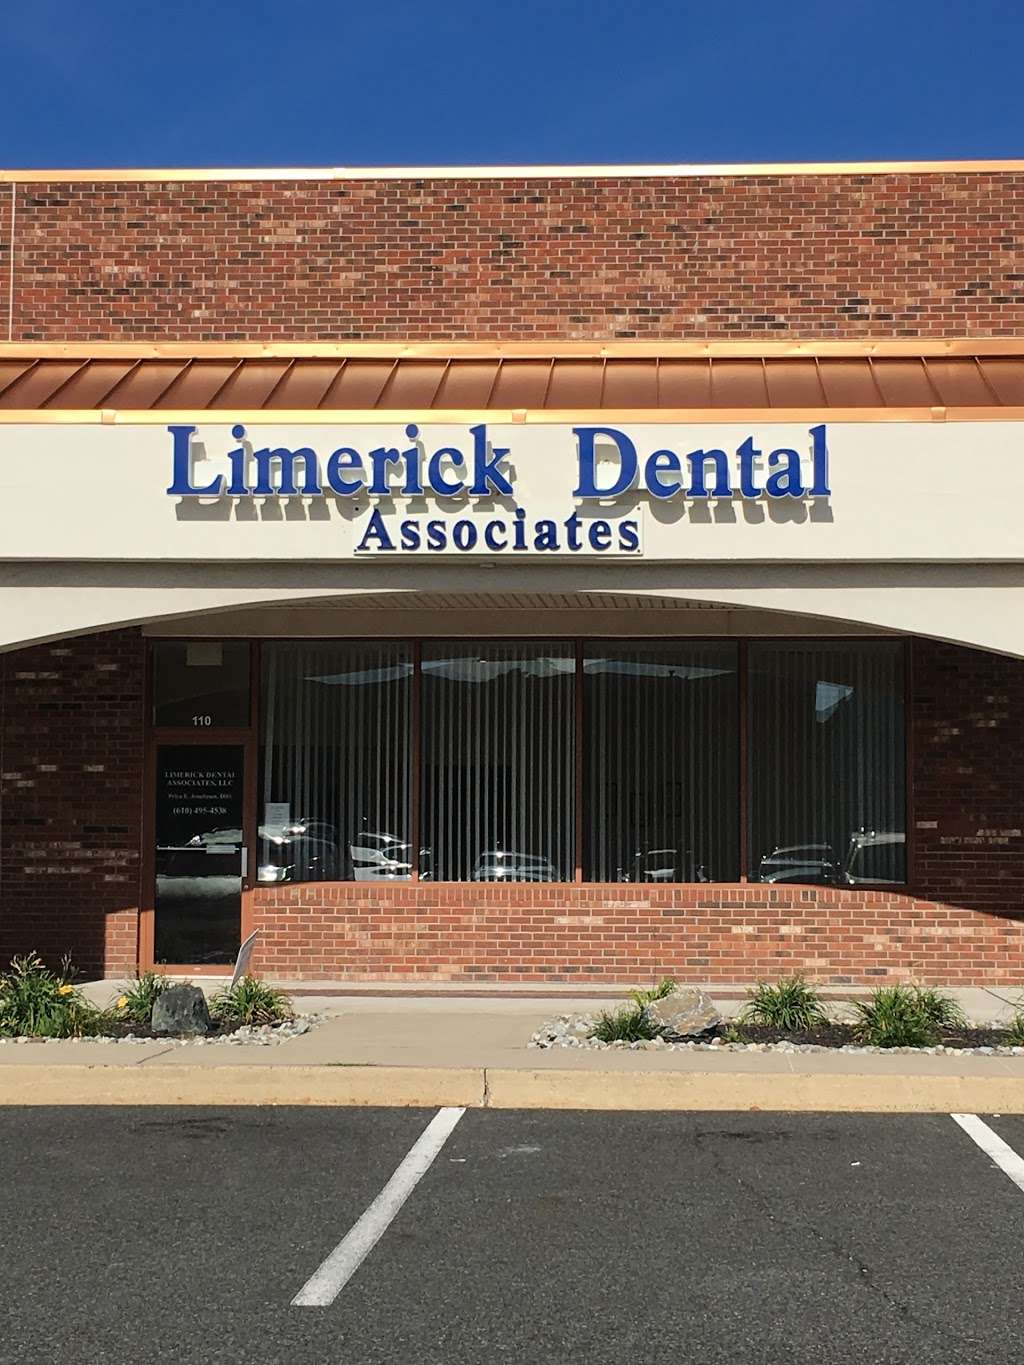 Limerick Dental Associates, LLC | 5 Kugler Rd #110, Limerick, PA 19468, USA | Phone: (610) 495-4538